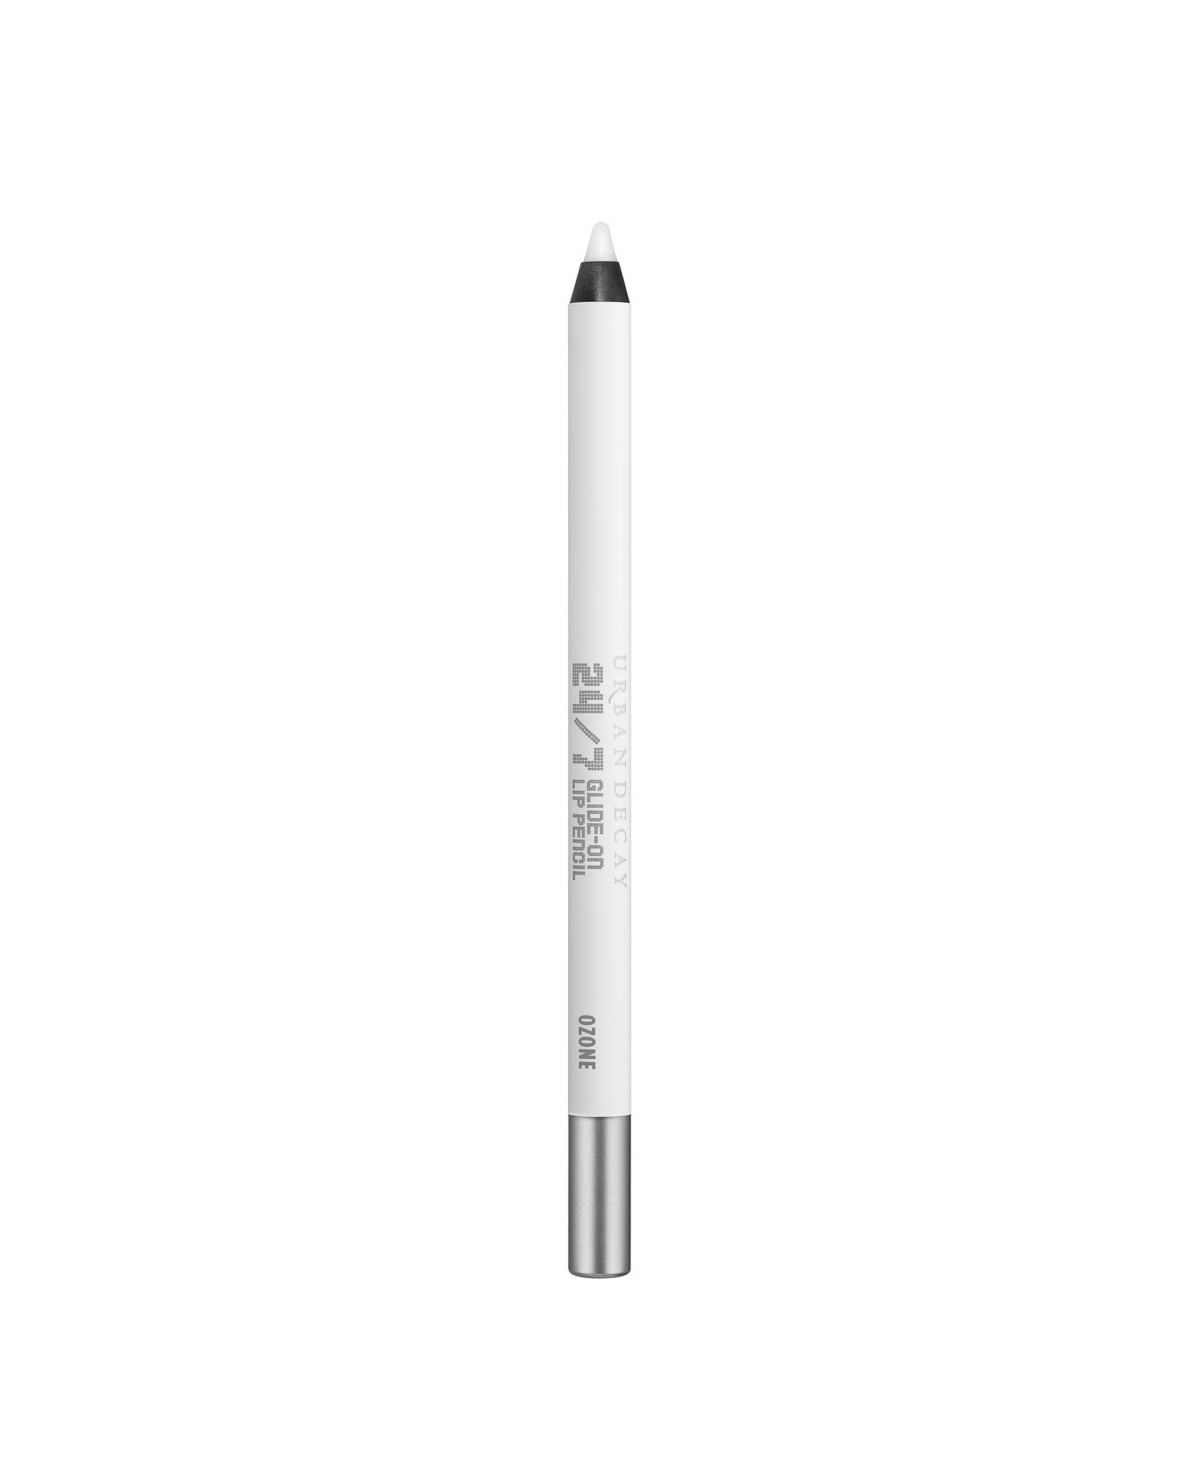 Vice 24/7 Glide-On Lip Liner Pencil - Liar (mauve nude)